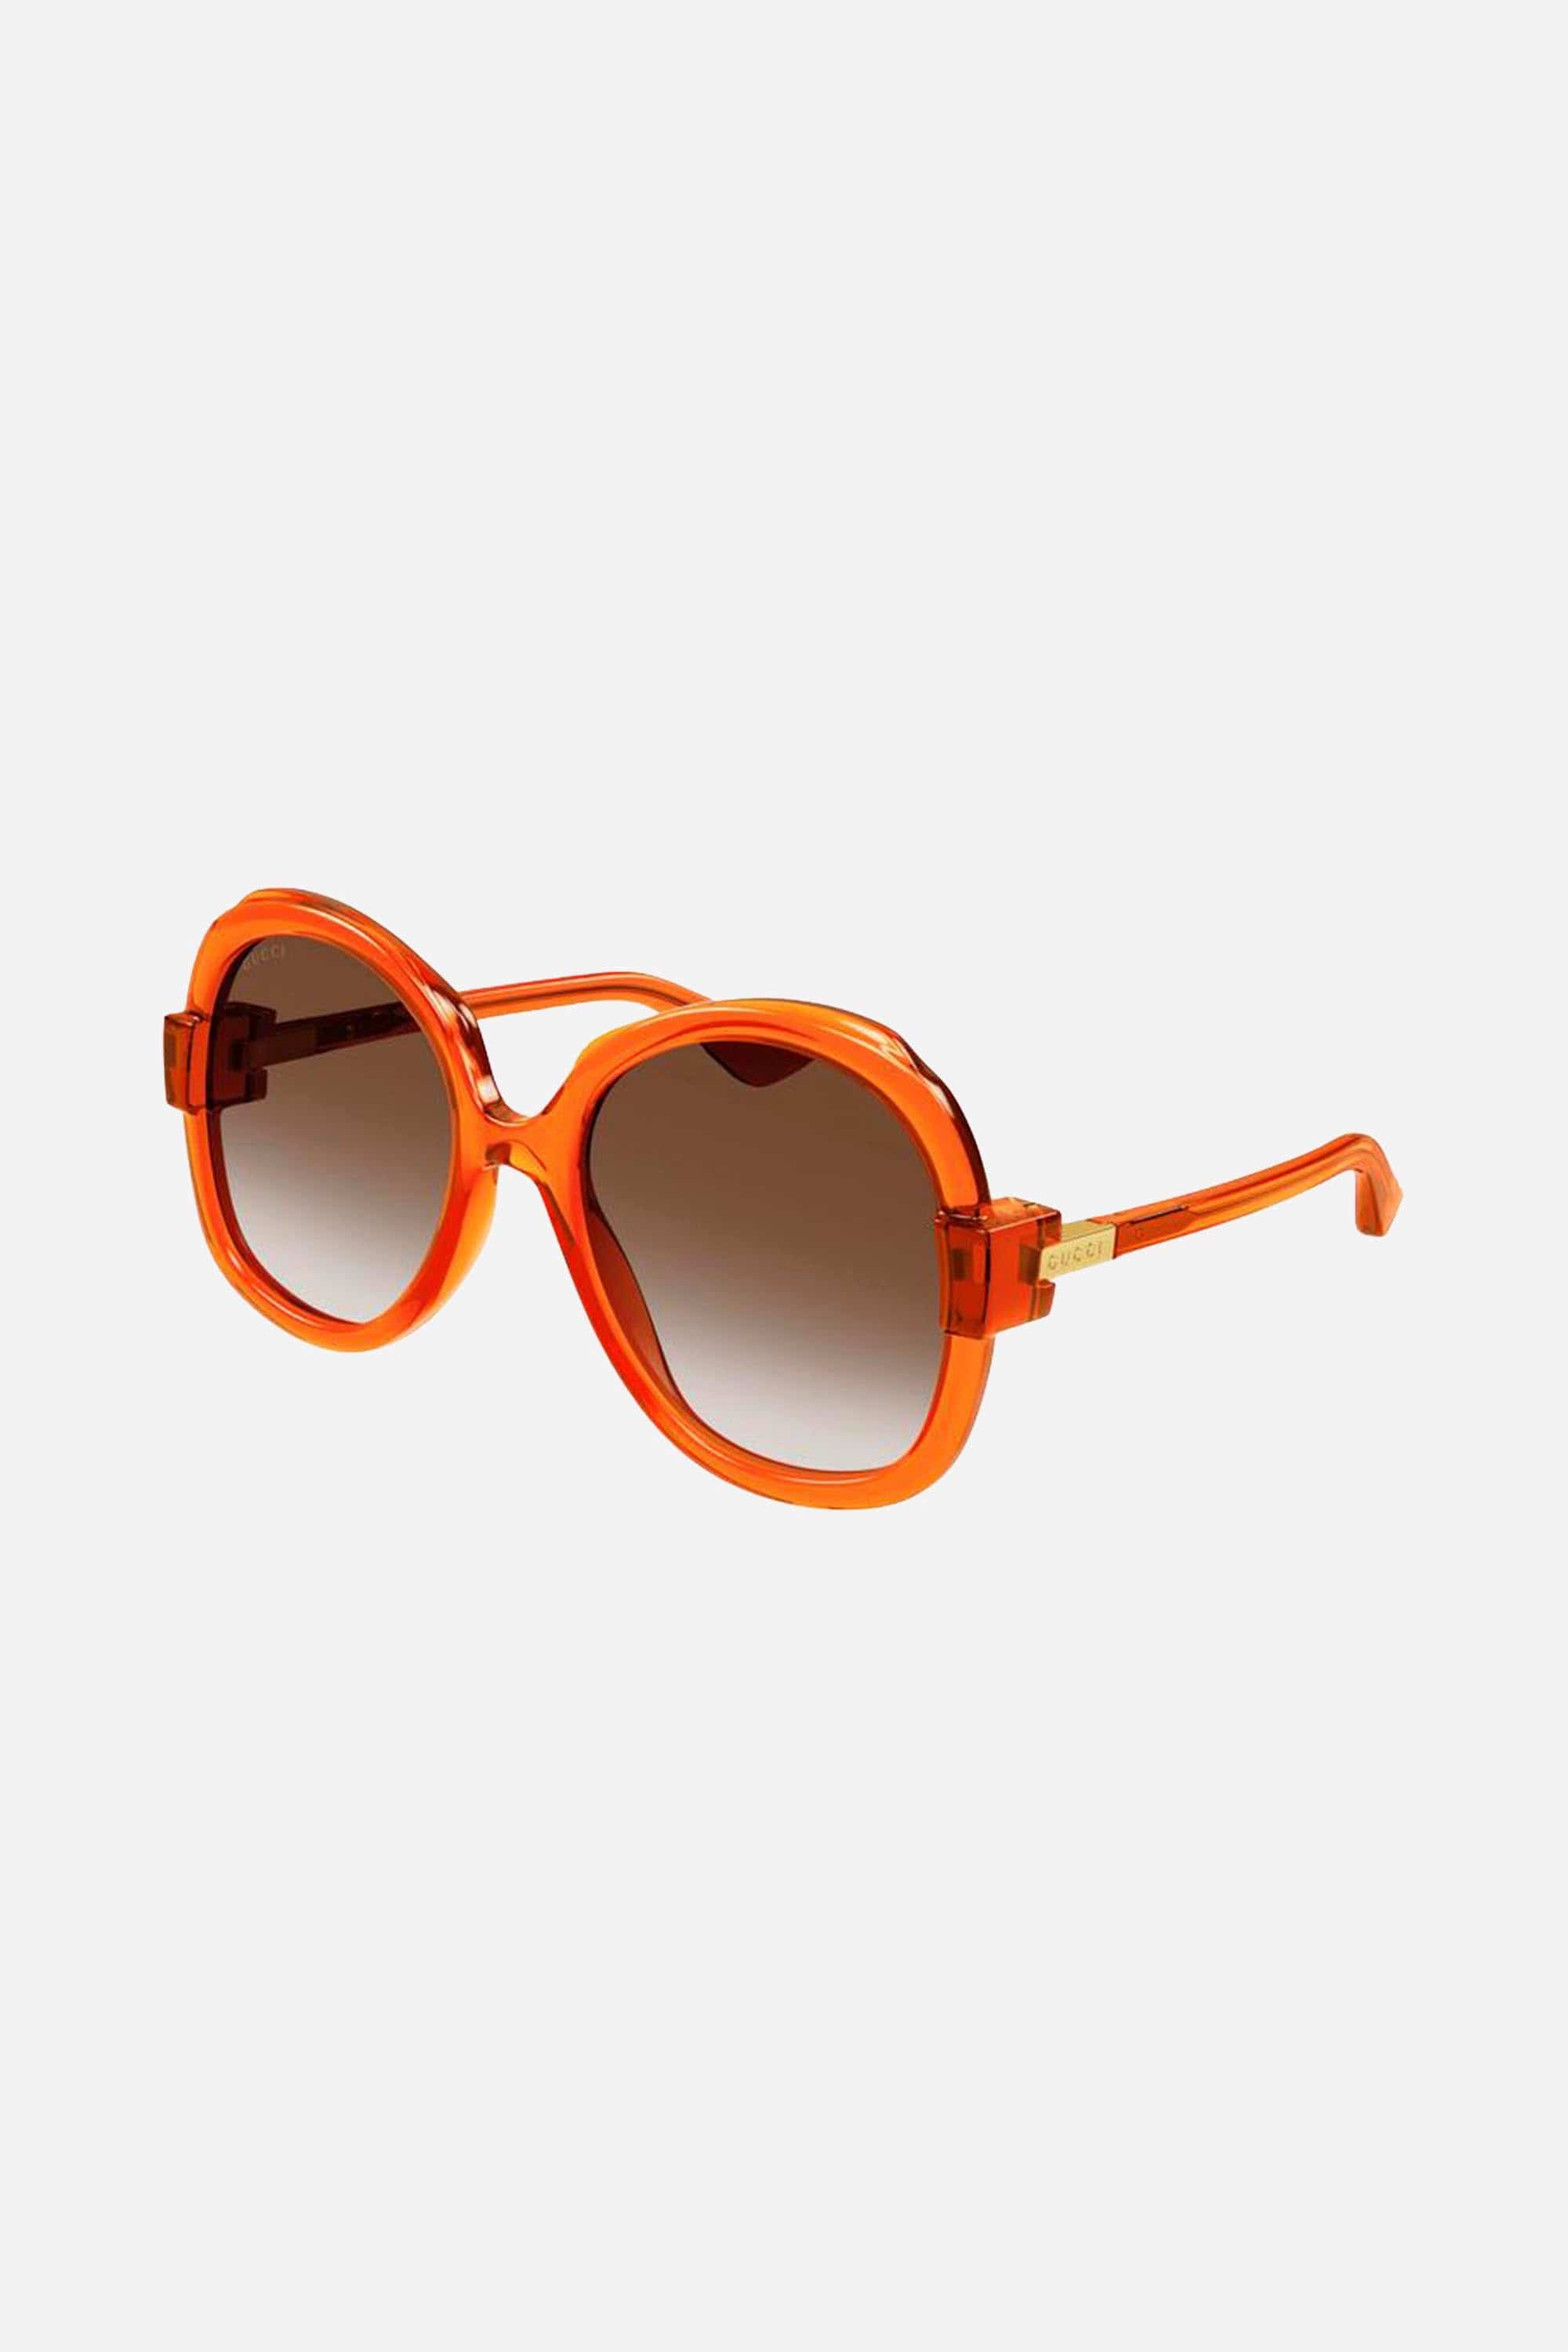 Gucci light havana round shape sunglasses - Eyewear Club